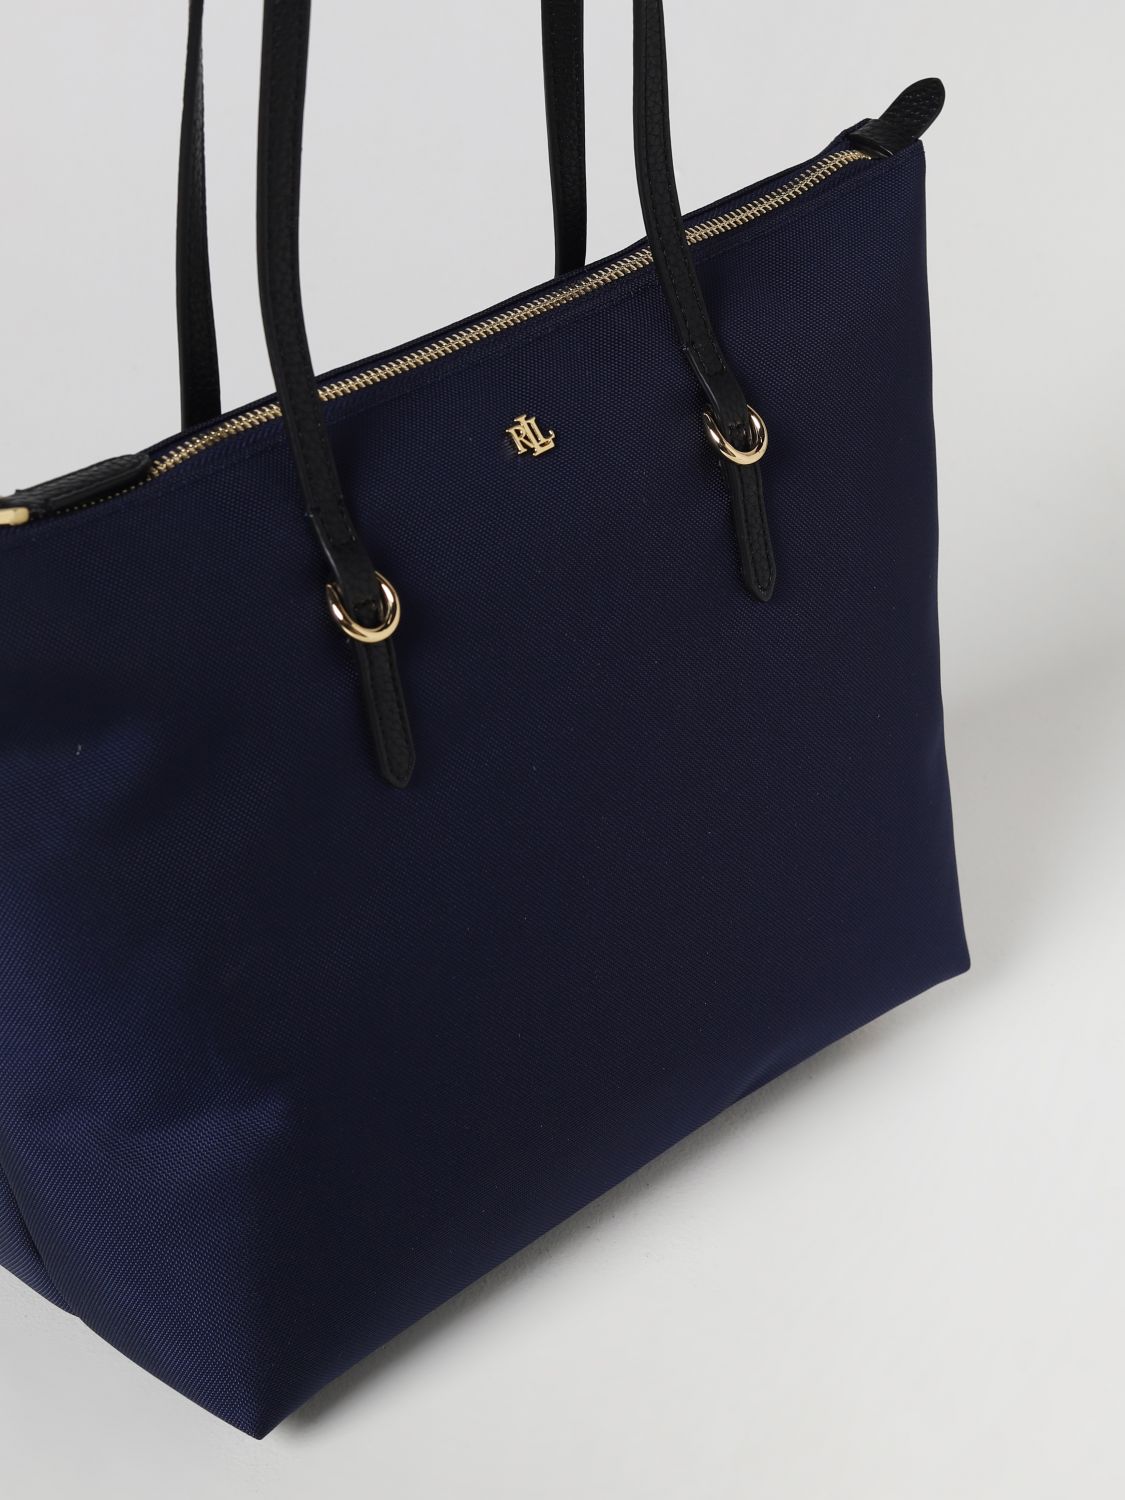 Lauren Ralph Lauren Beckett printed tote bag Handbag 376164, The ™ Whitney  Hobo bag is sleek and practical